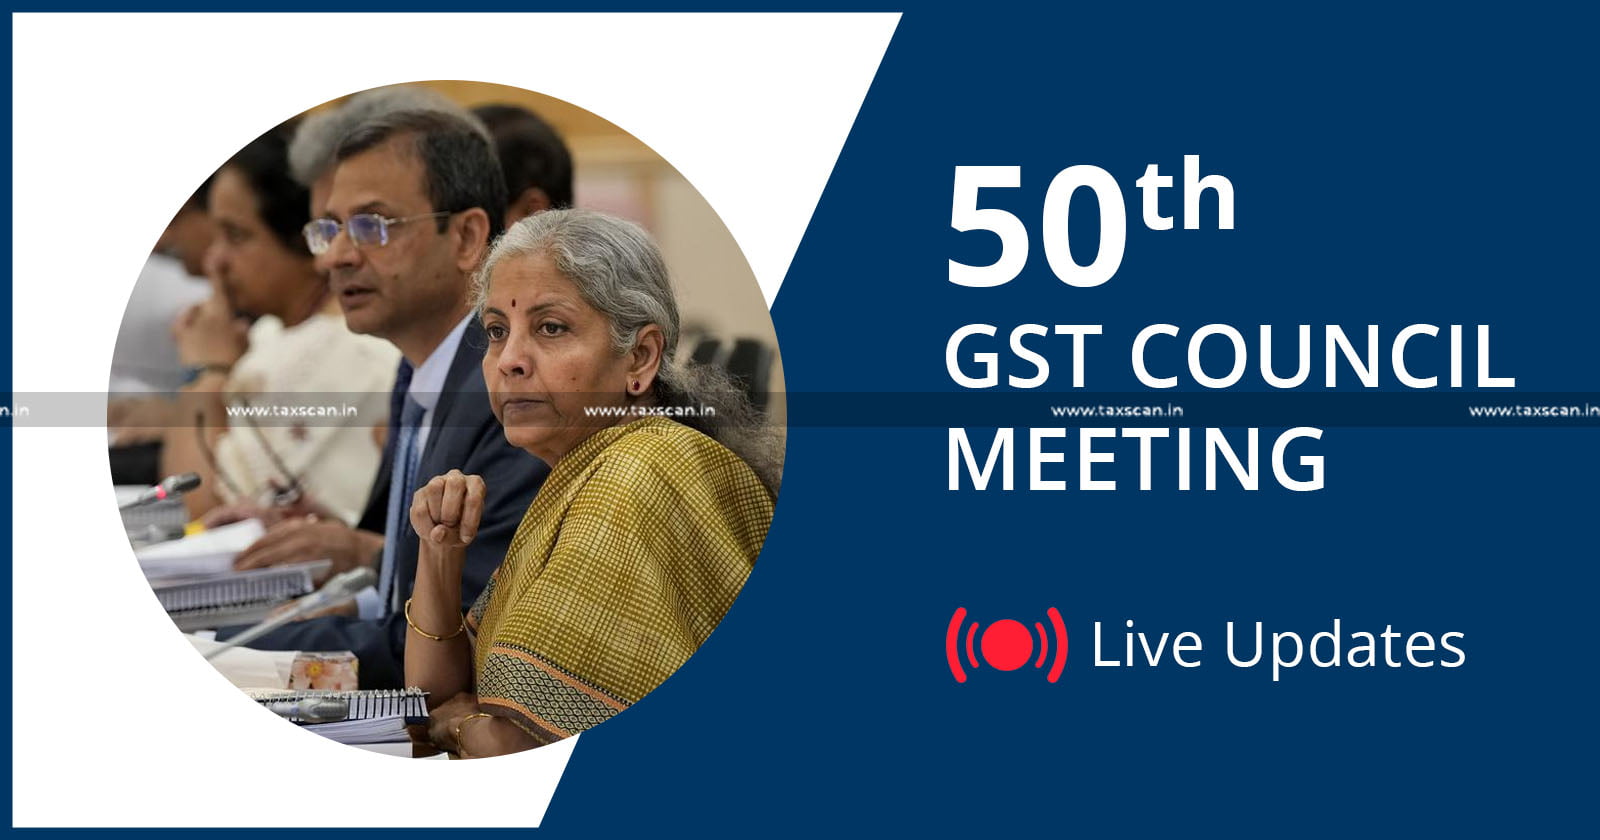 50th GST Council Meeting - GST Council Meeting - 50th GST Council - Live Updates - taxscan